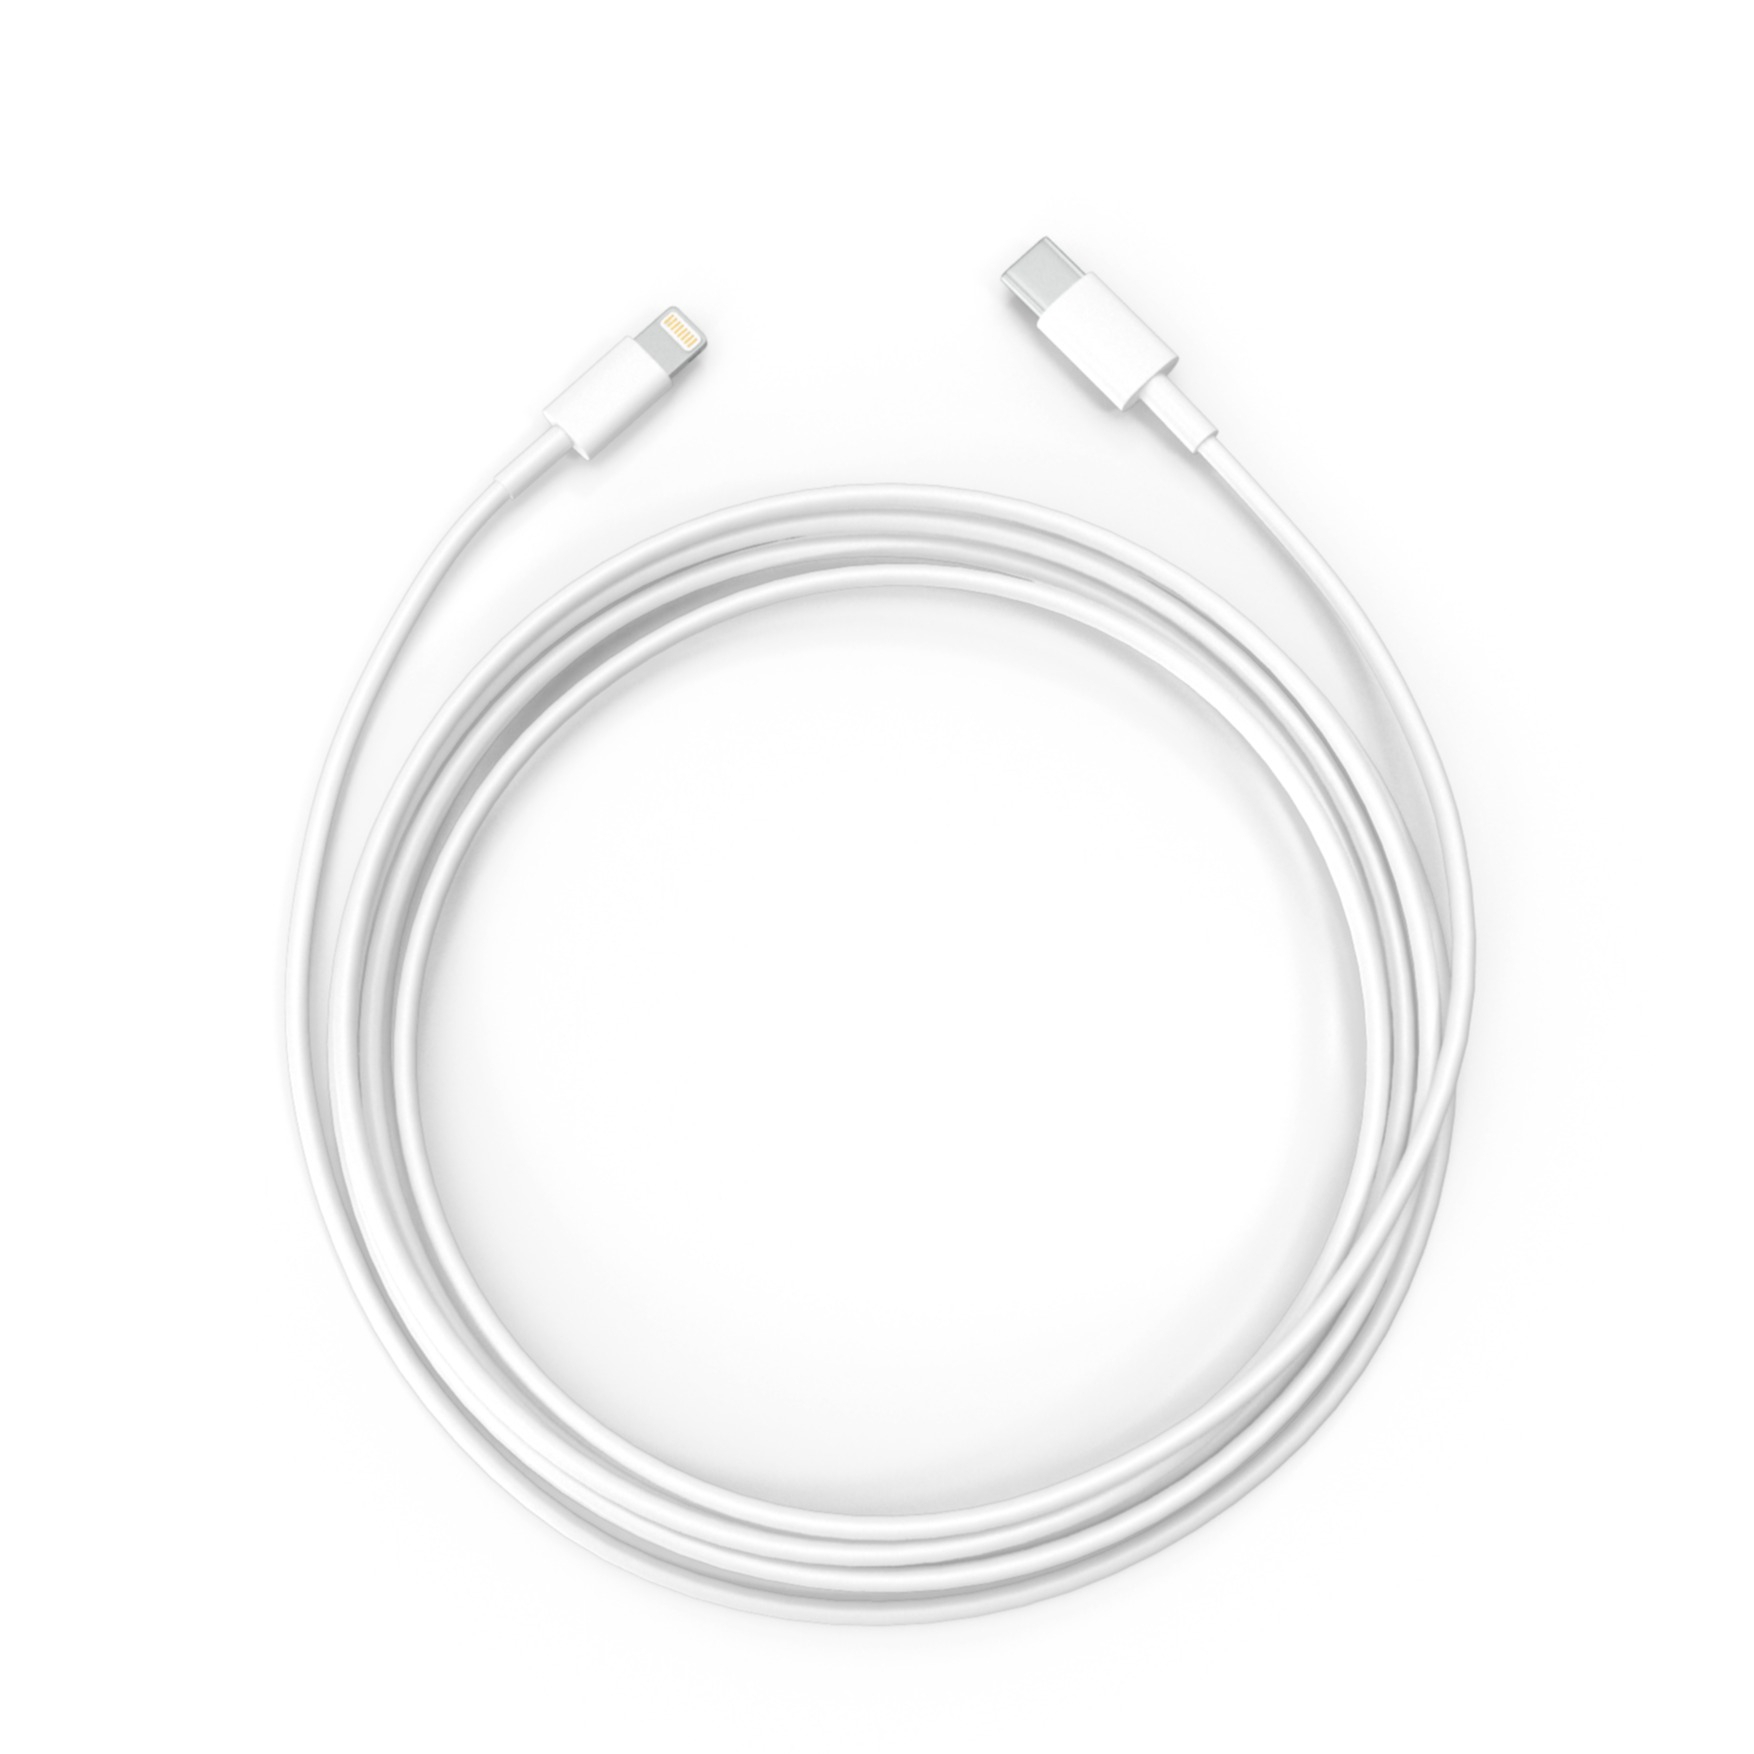 Image of Apple - (1m) iPhone 13 Pro Lightning auf USB C Ladekabel Datenkabel MK0X2ZM/A - Weiss bei Apfelkiste.ch